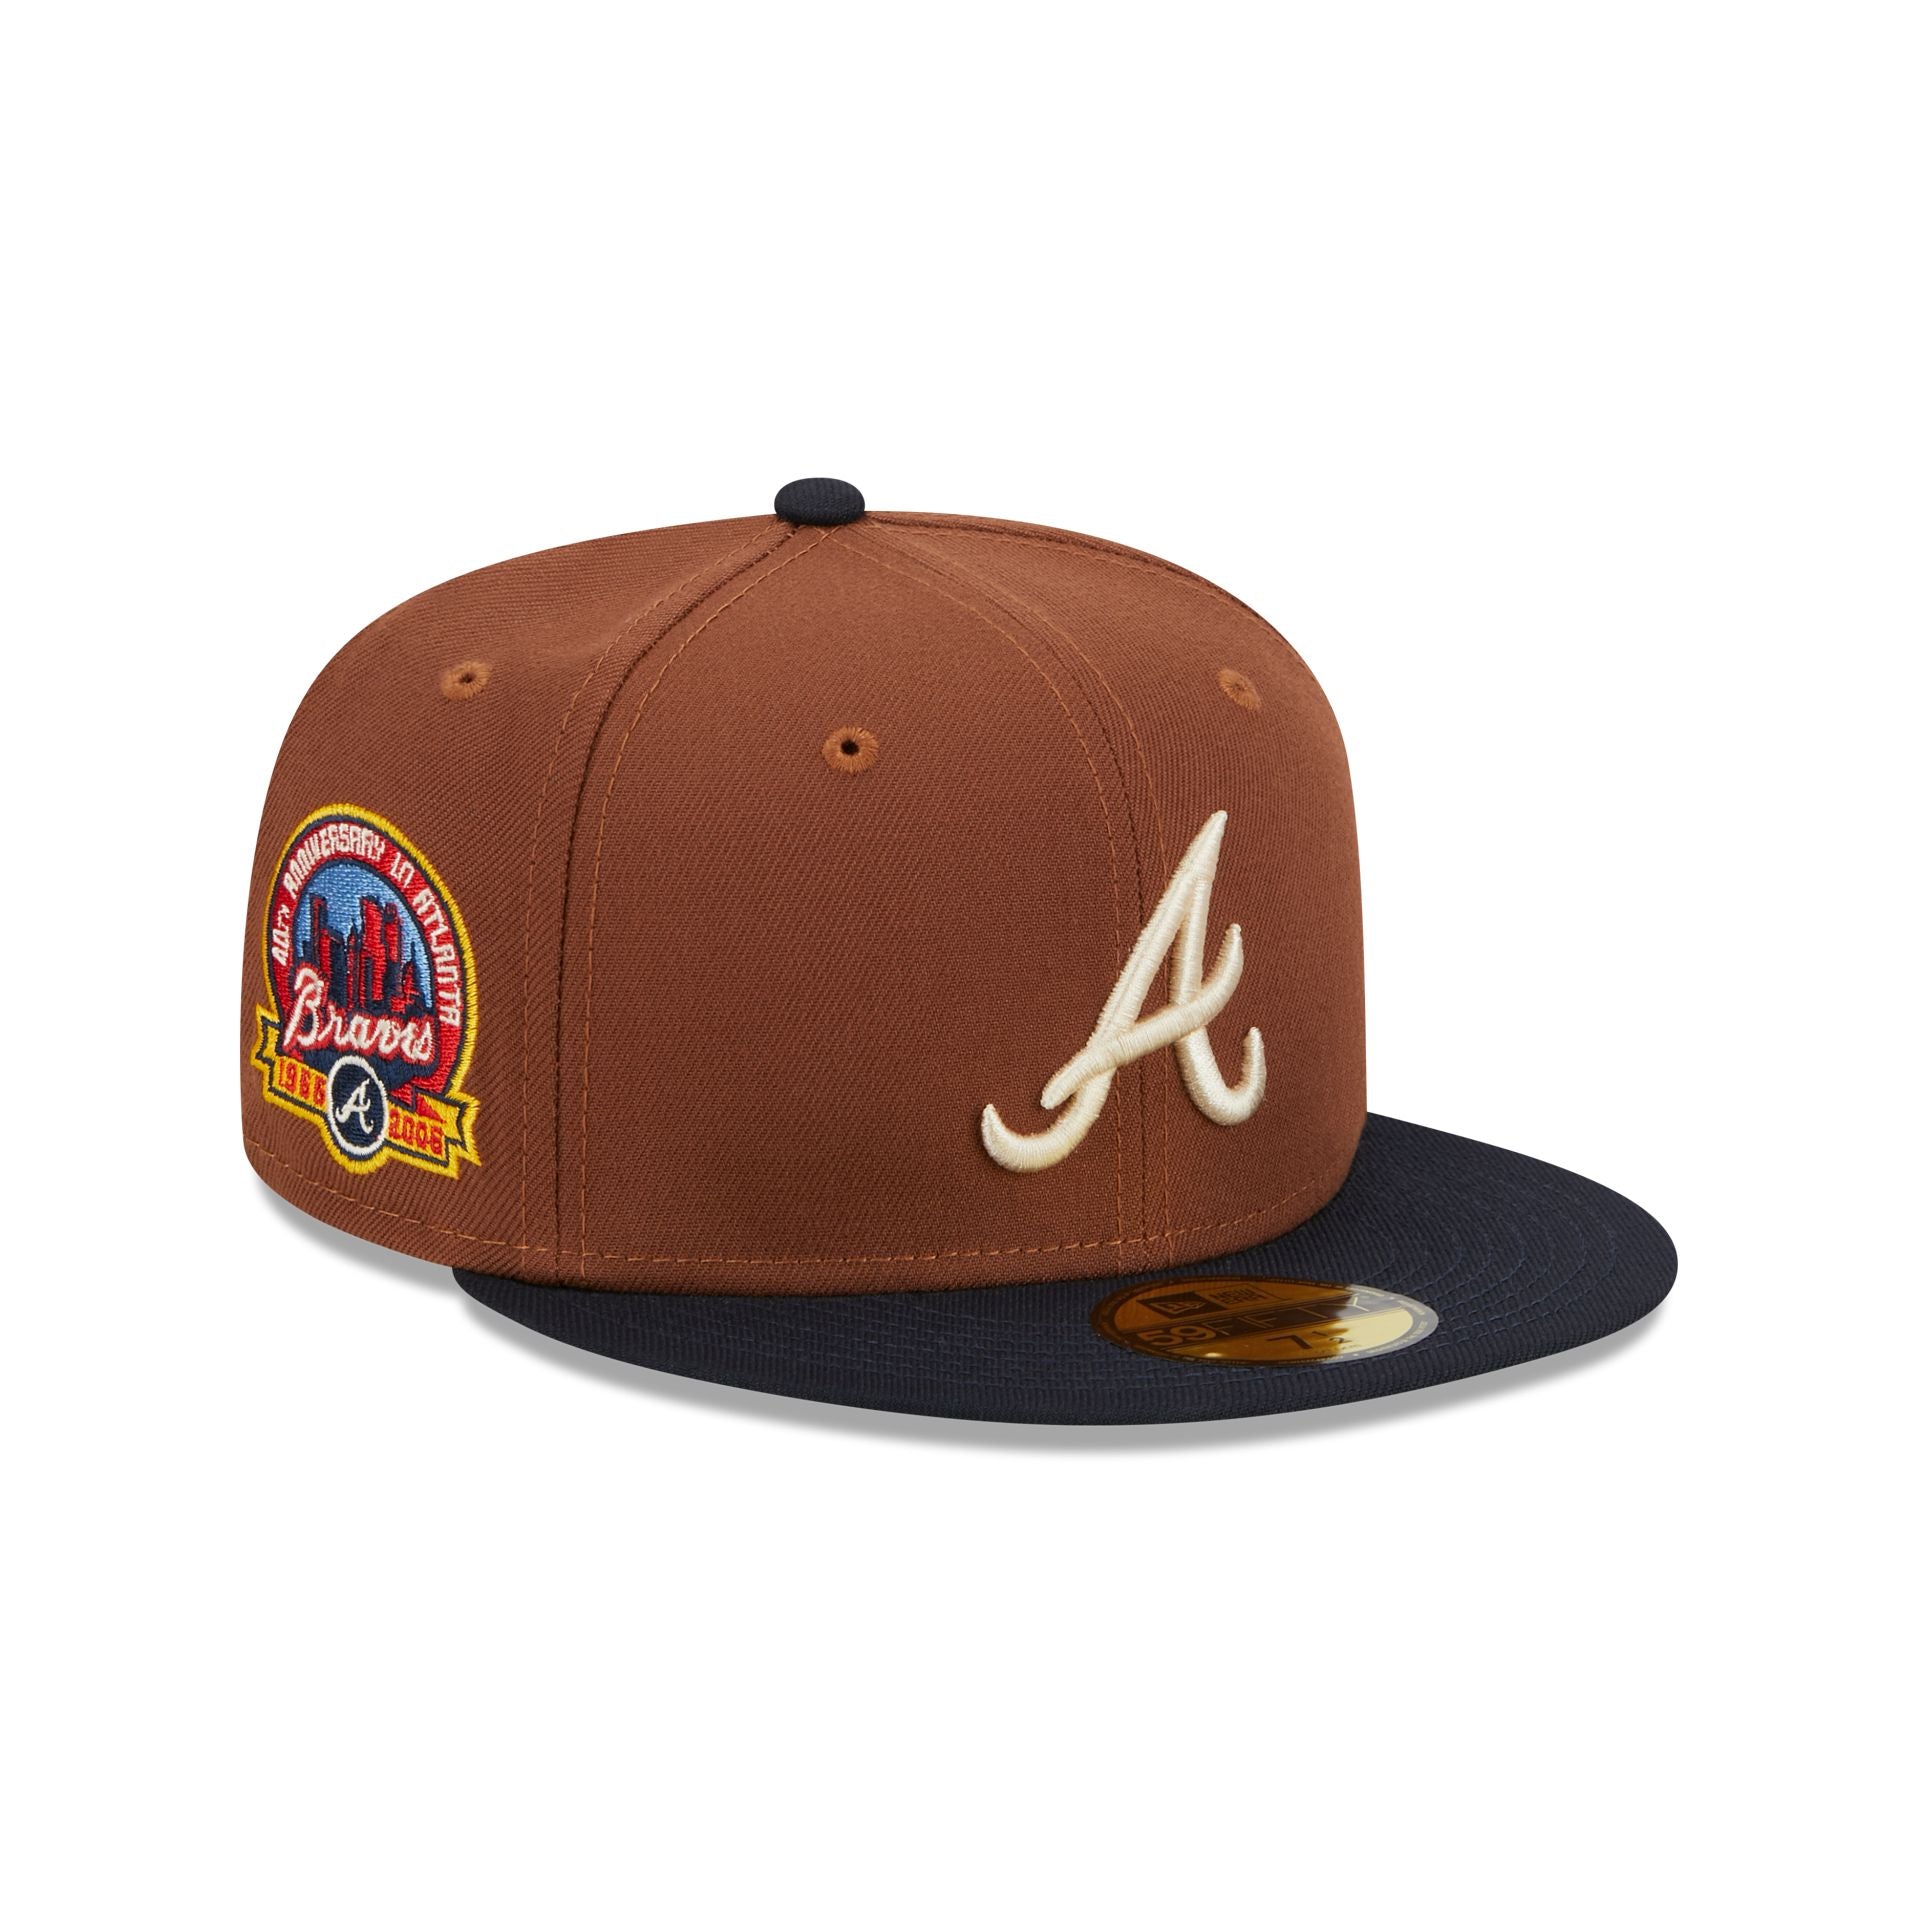 New era 59 FIFTY Atlanta Braves fitted hat/cap, Men's Fashion